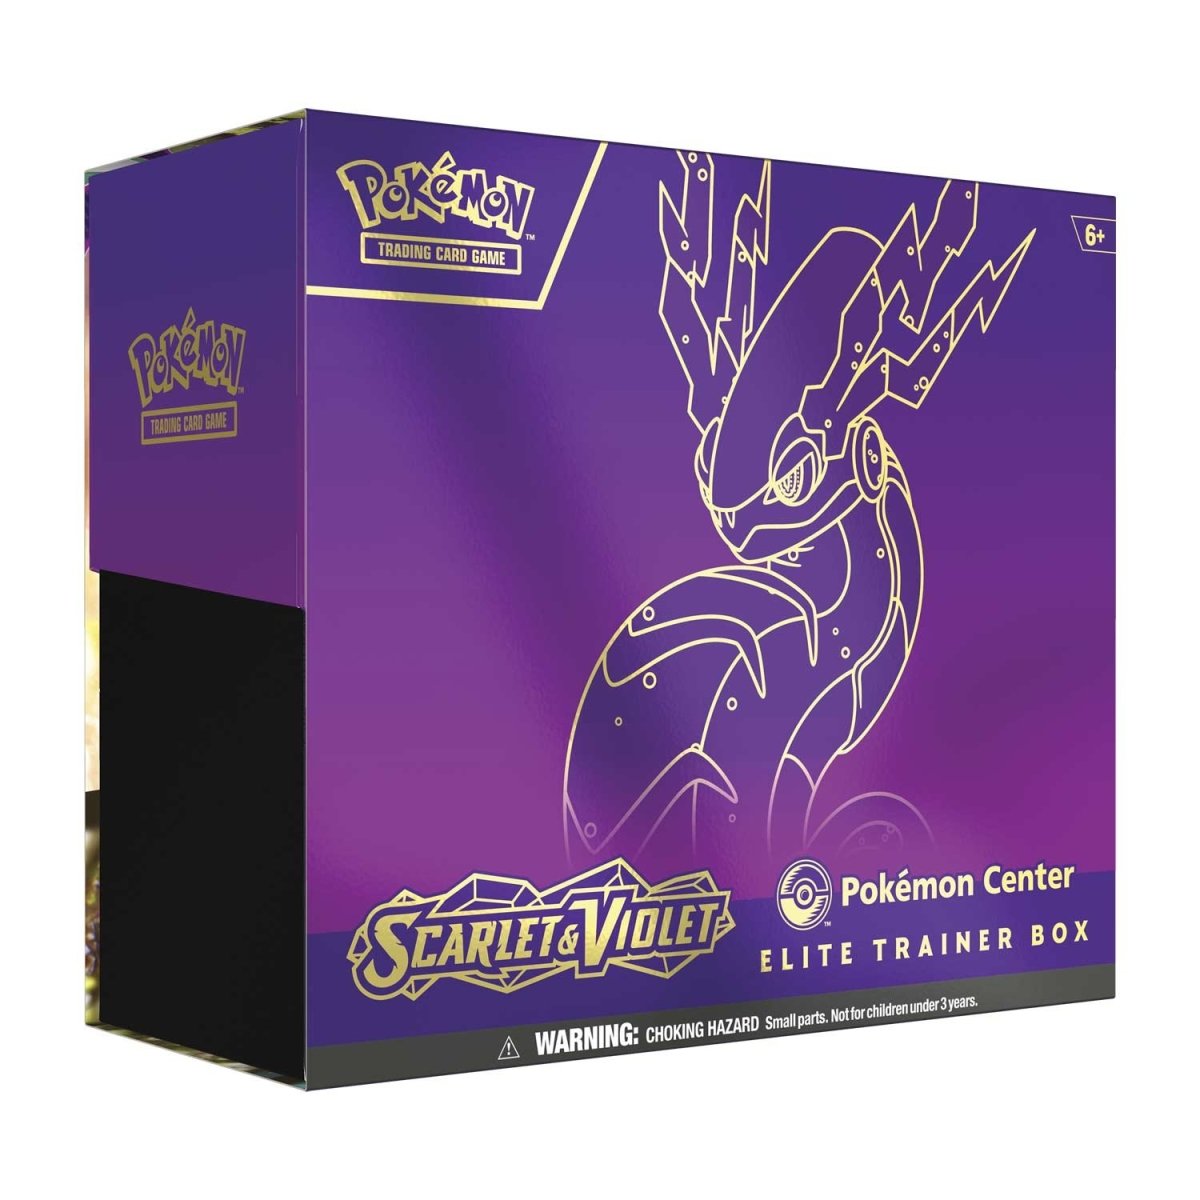 Pokémon TCG Scarlet & Violet 151 Pokémon Center Elite Trainer Box - US